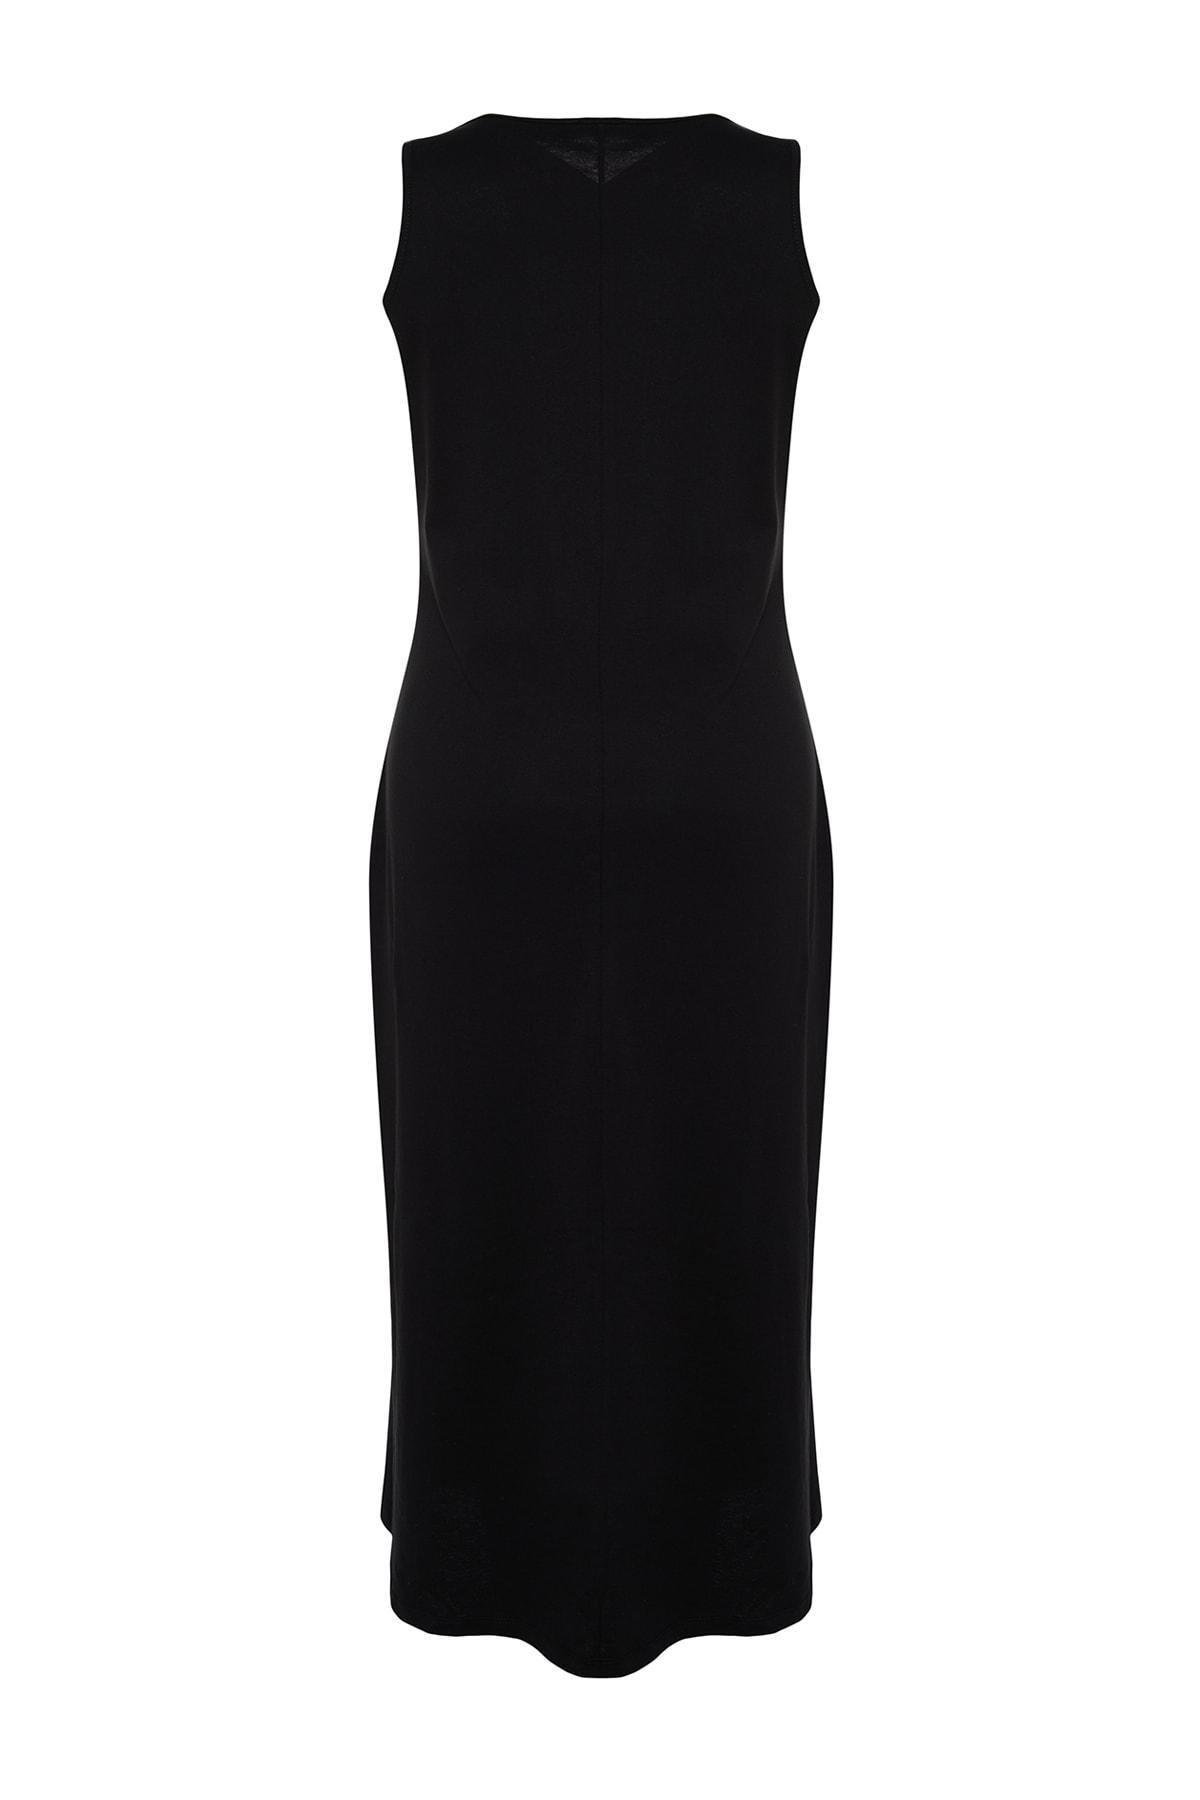 Trendyol - Black Mermaid Plus Size Midi Dress